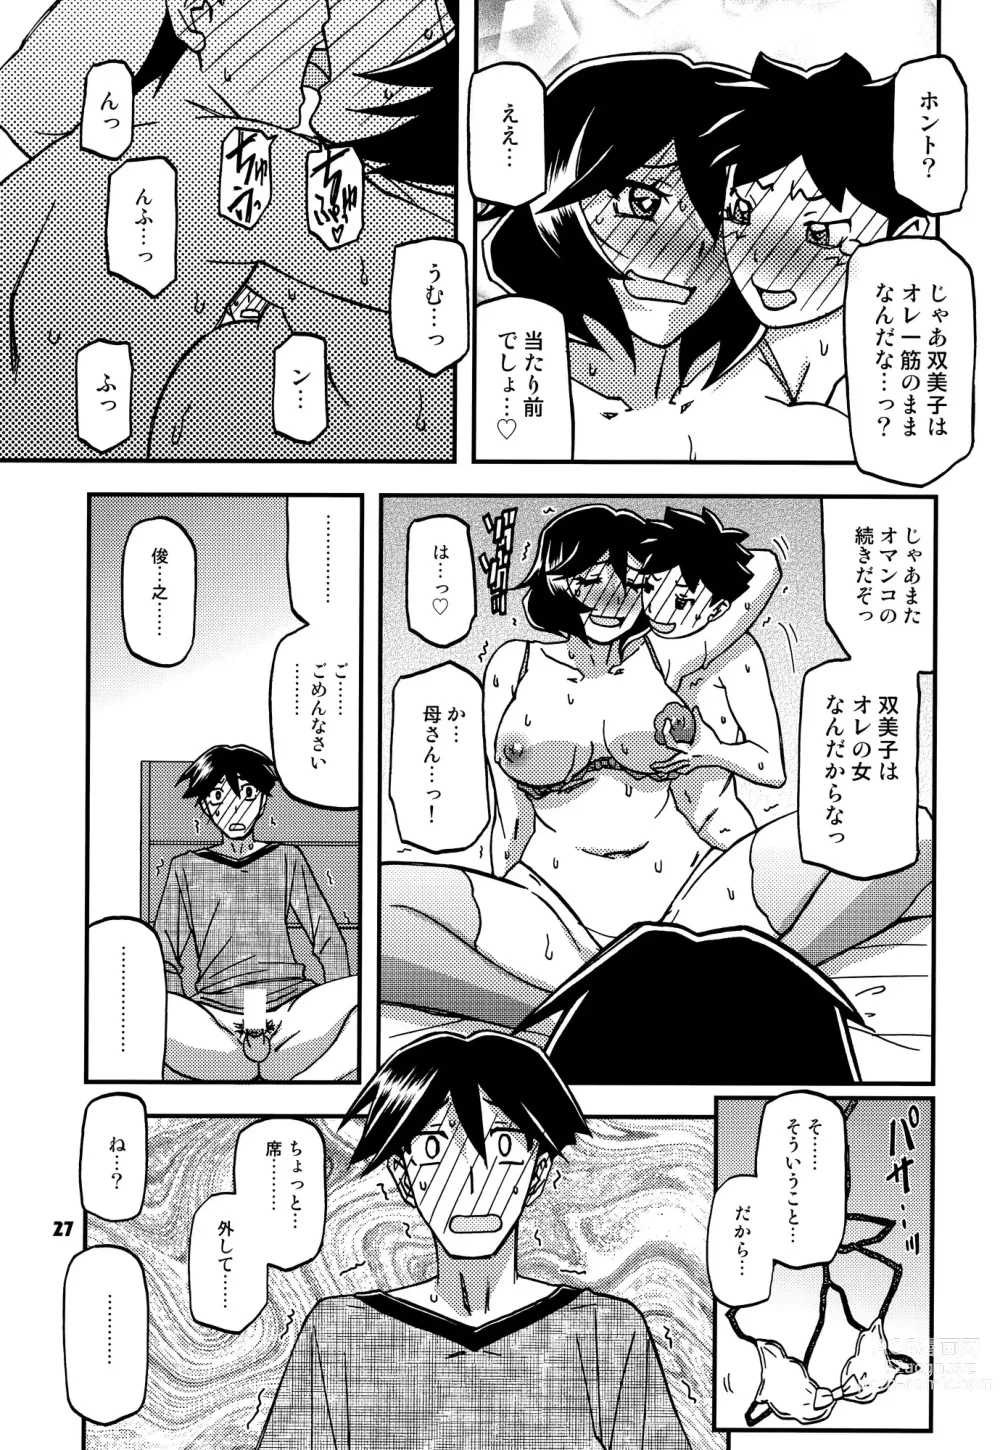 Page 26 of doujinshi Akebi no Mi - Fumiko CONTINUATION